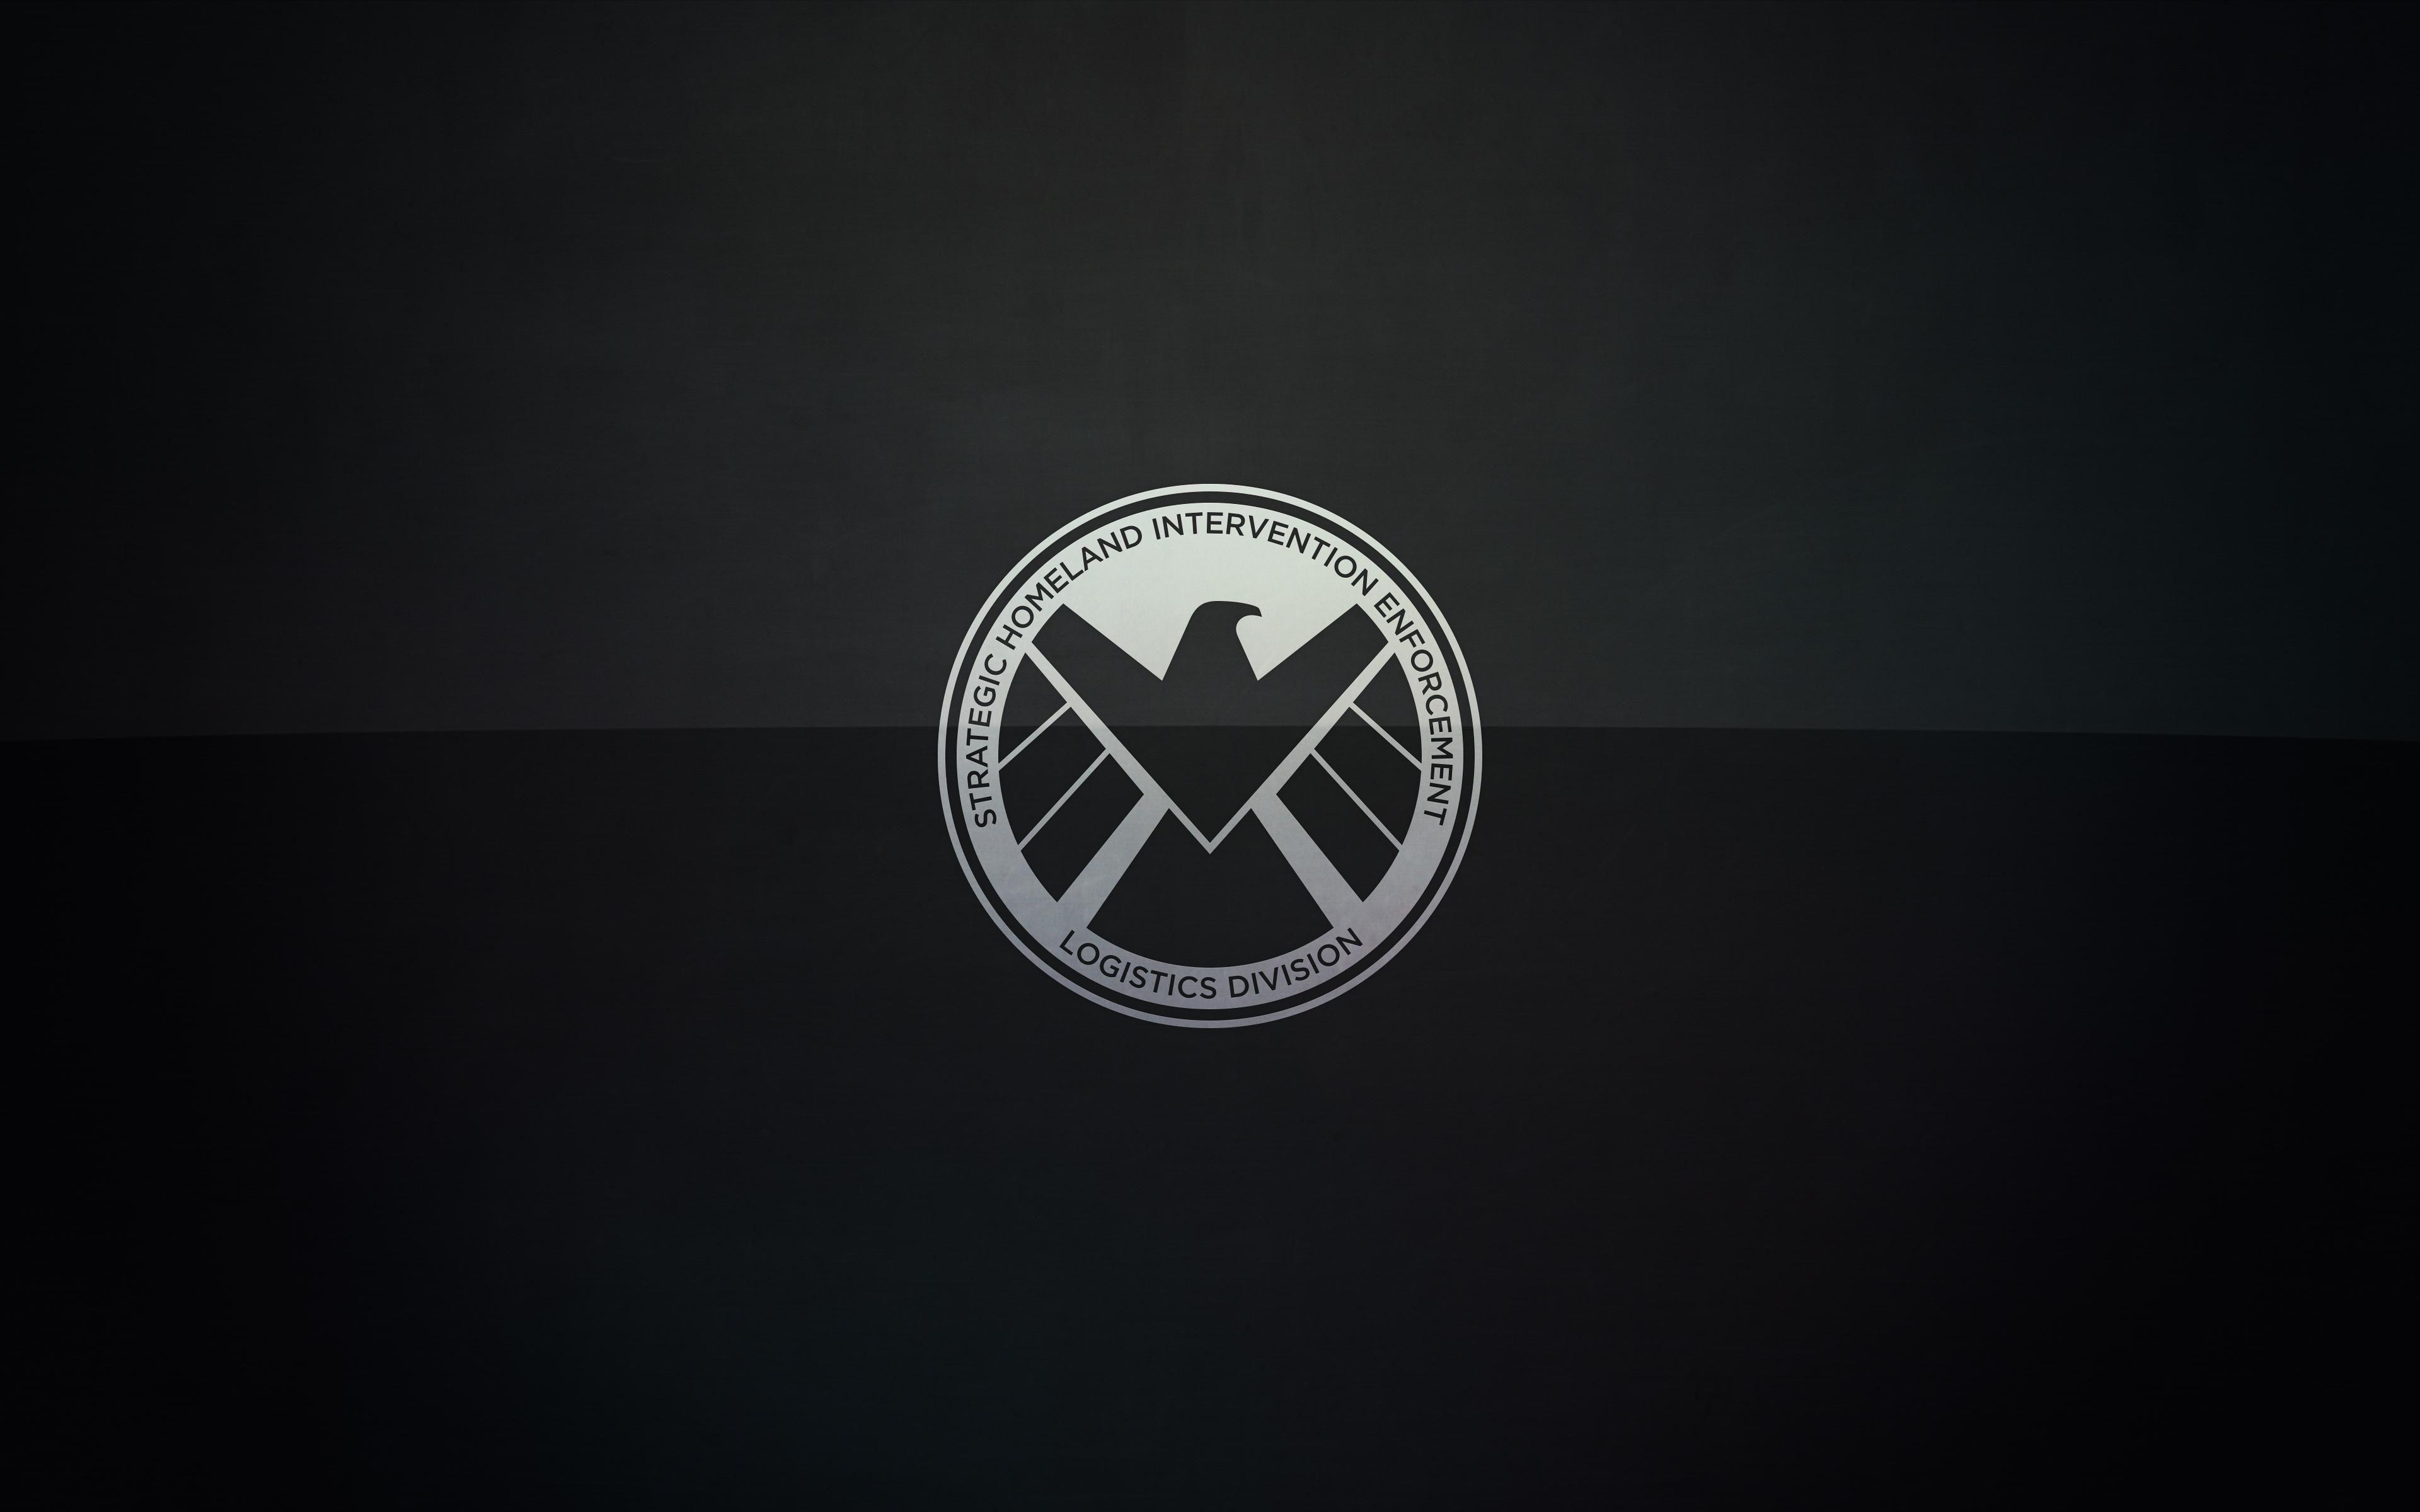 Marvel's Agents of S.H.I.E.L.D. Logo Wallpaper Wide or HD. TV